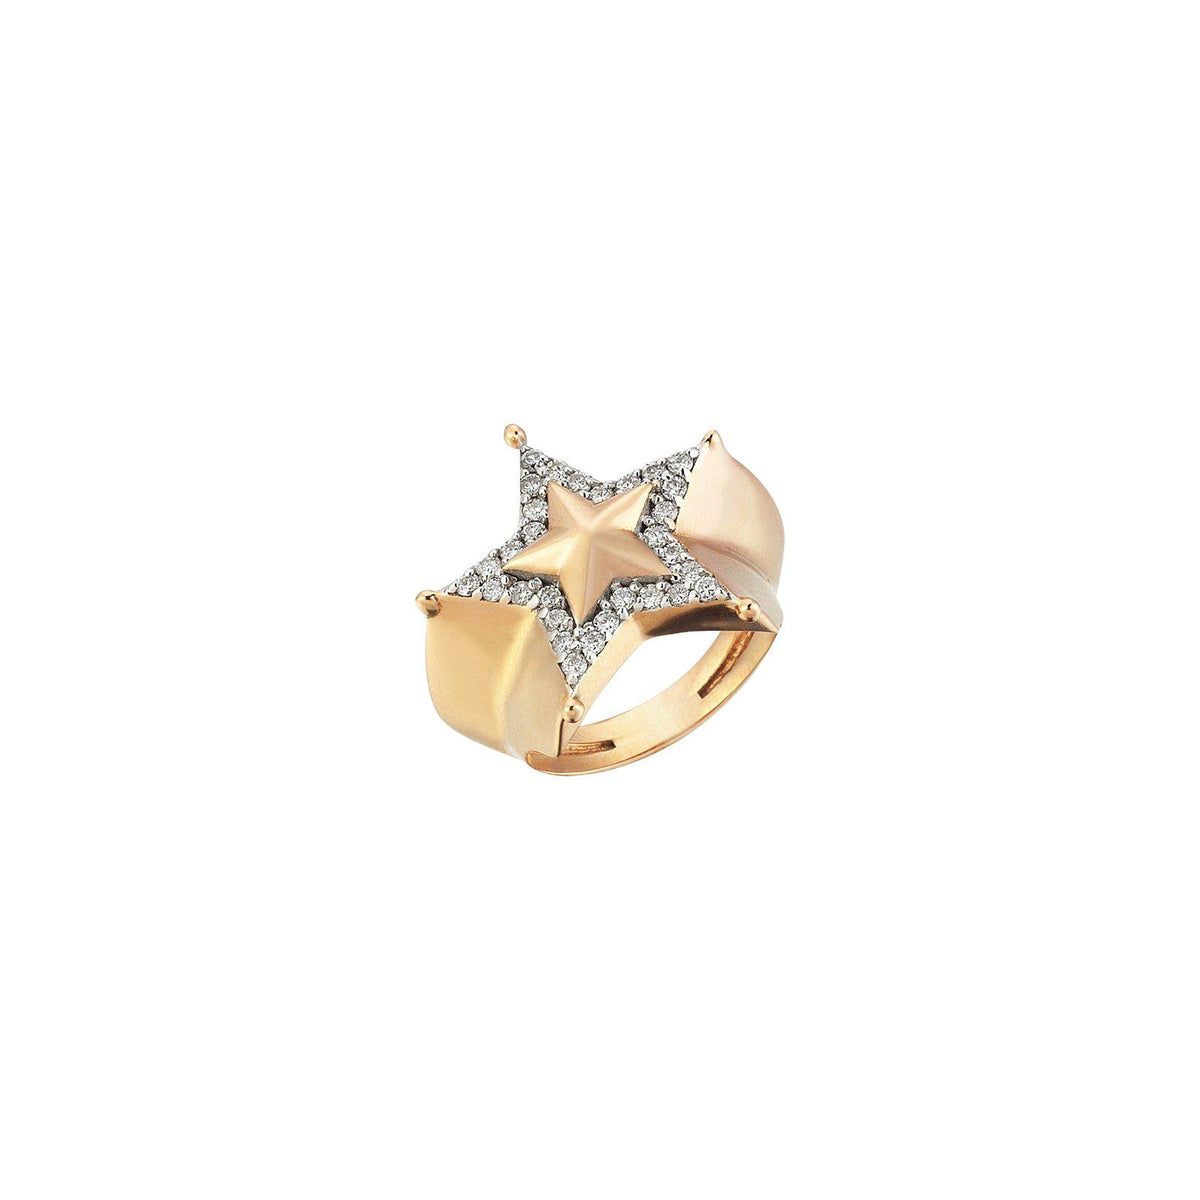 Sheriff Star Pinky Ring